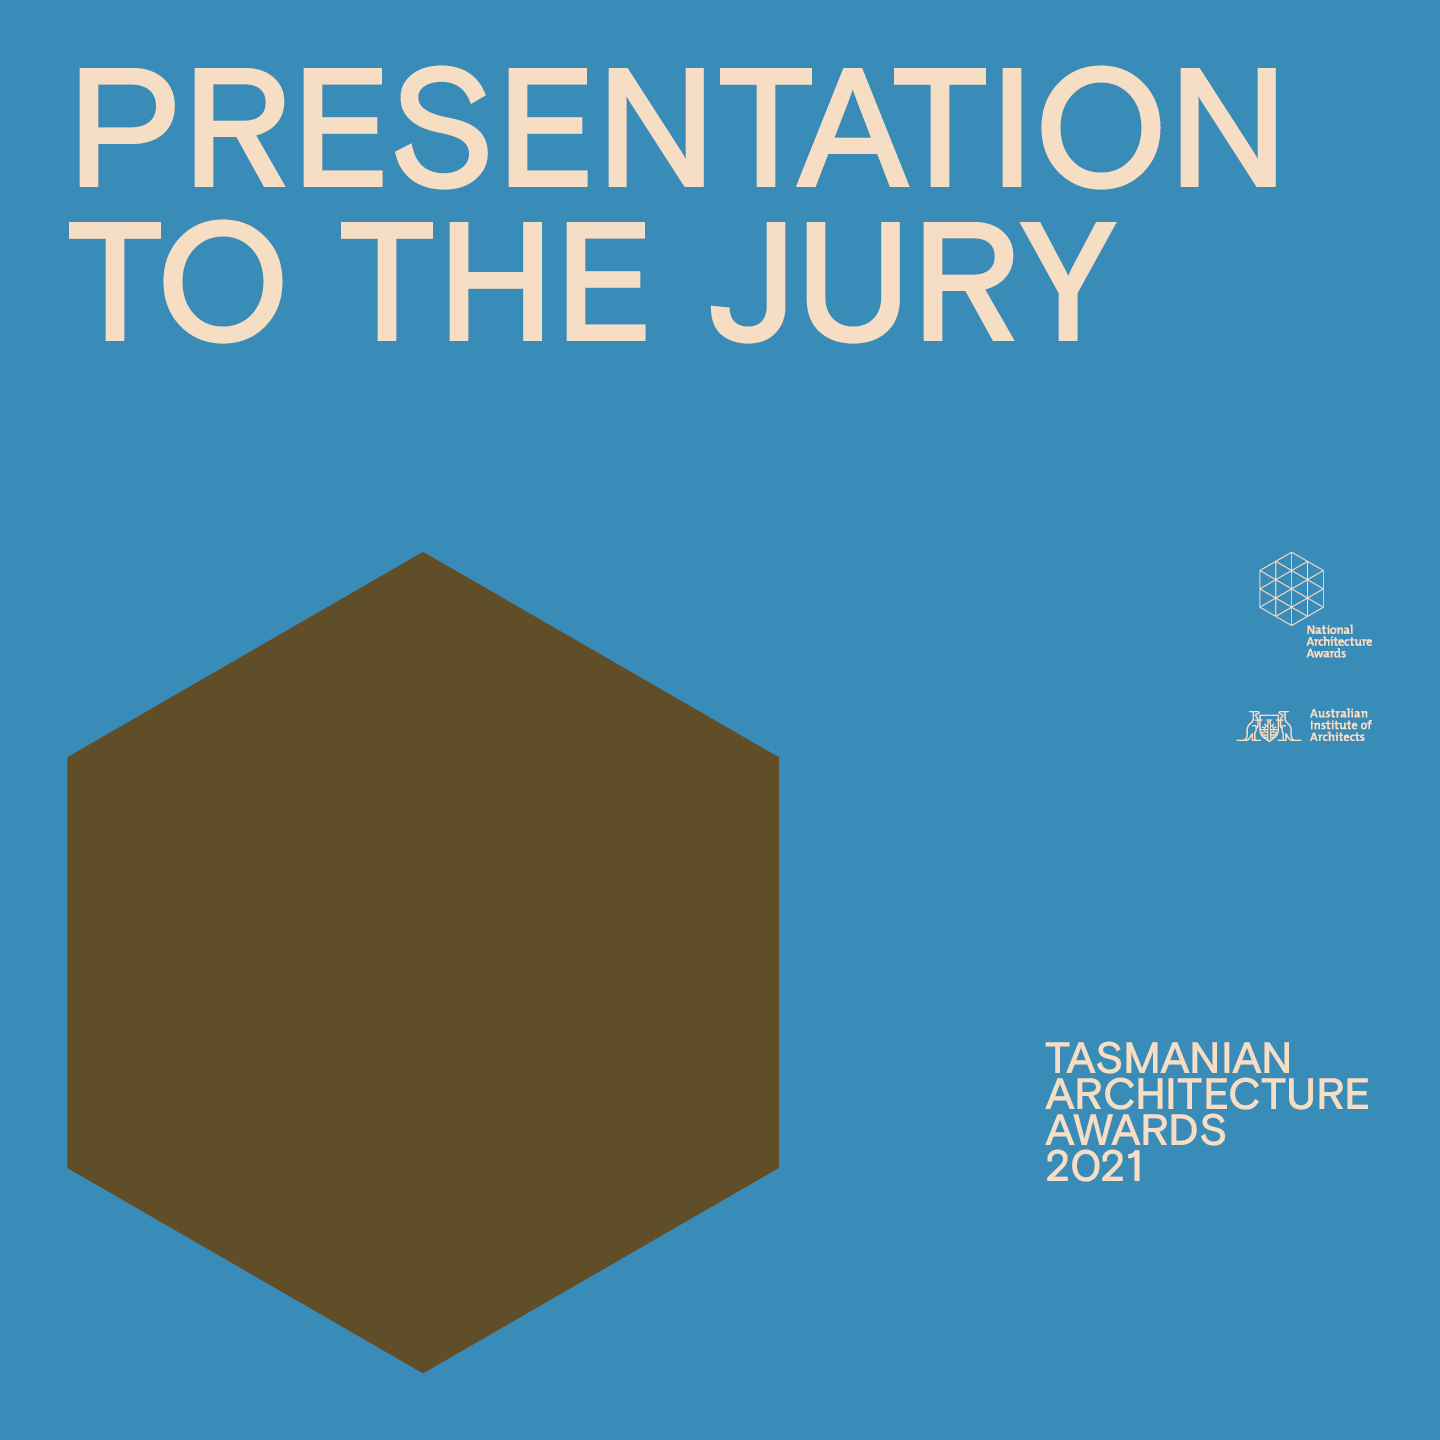 Tasmanian Architecture Awards 2021: Presentation to the Jury